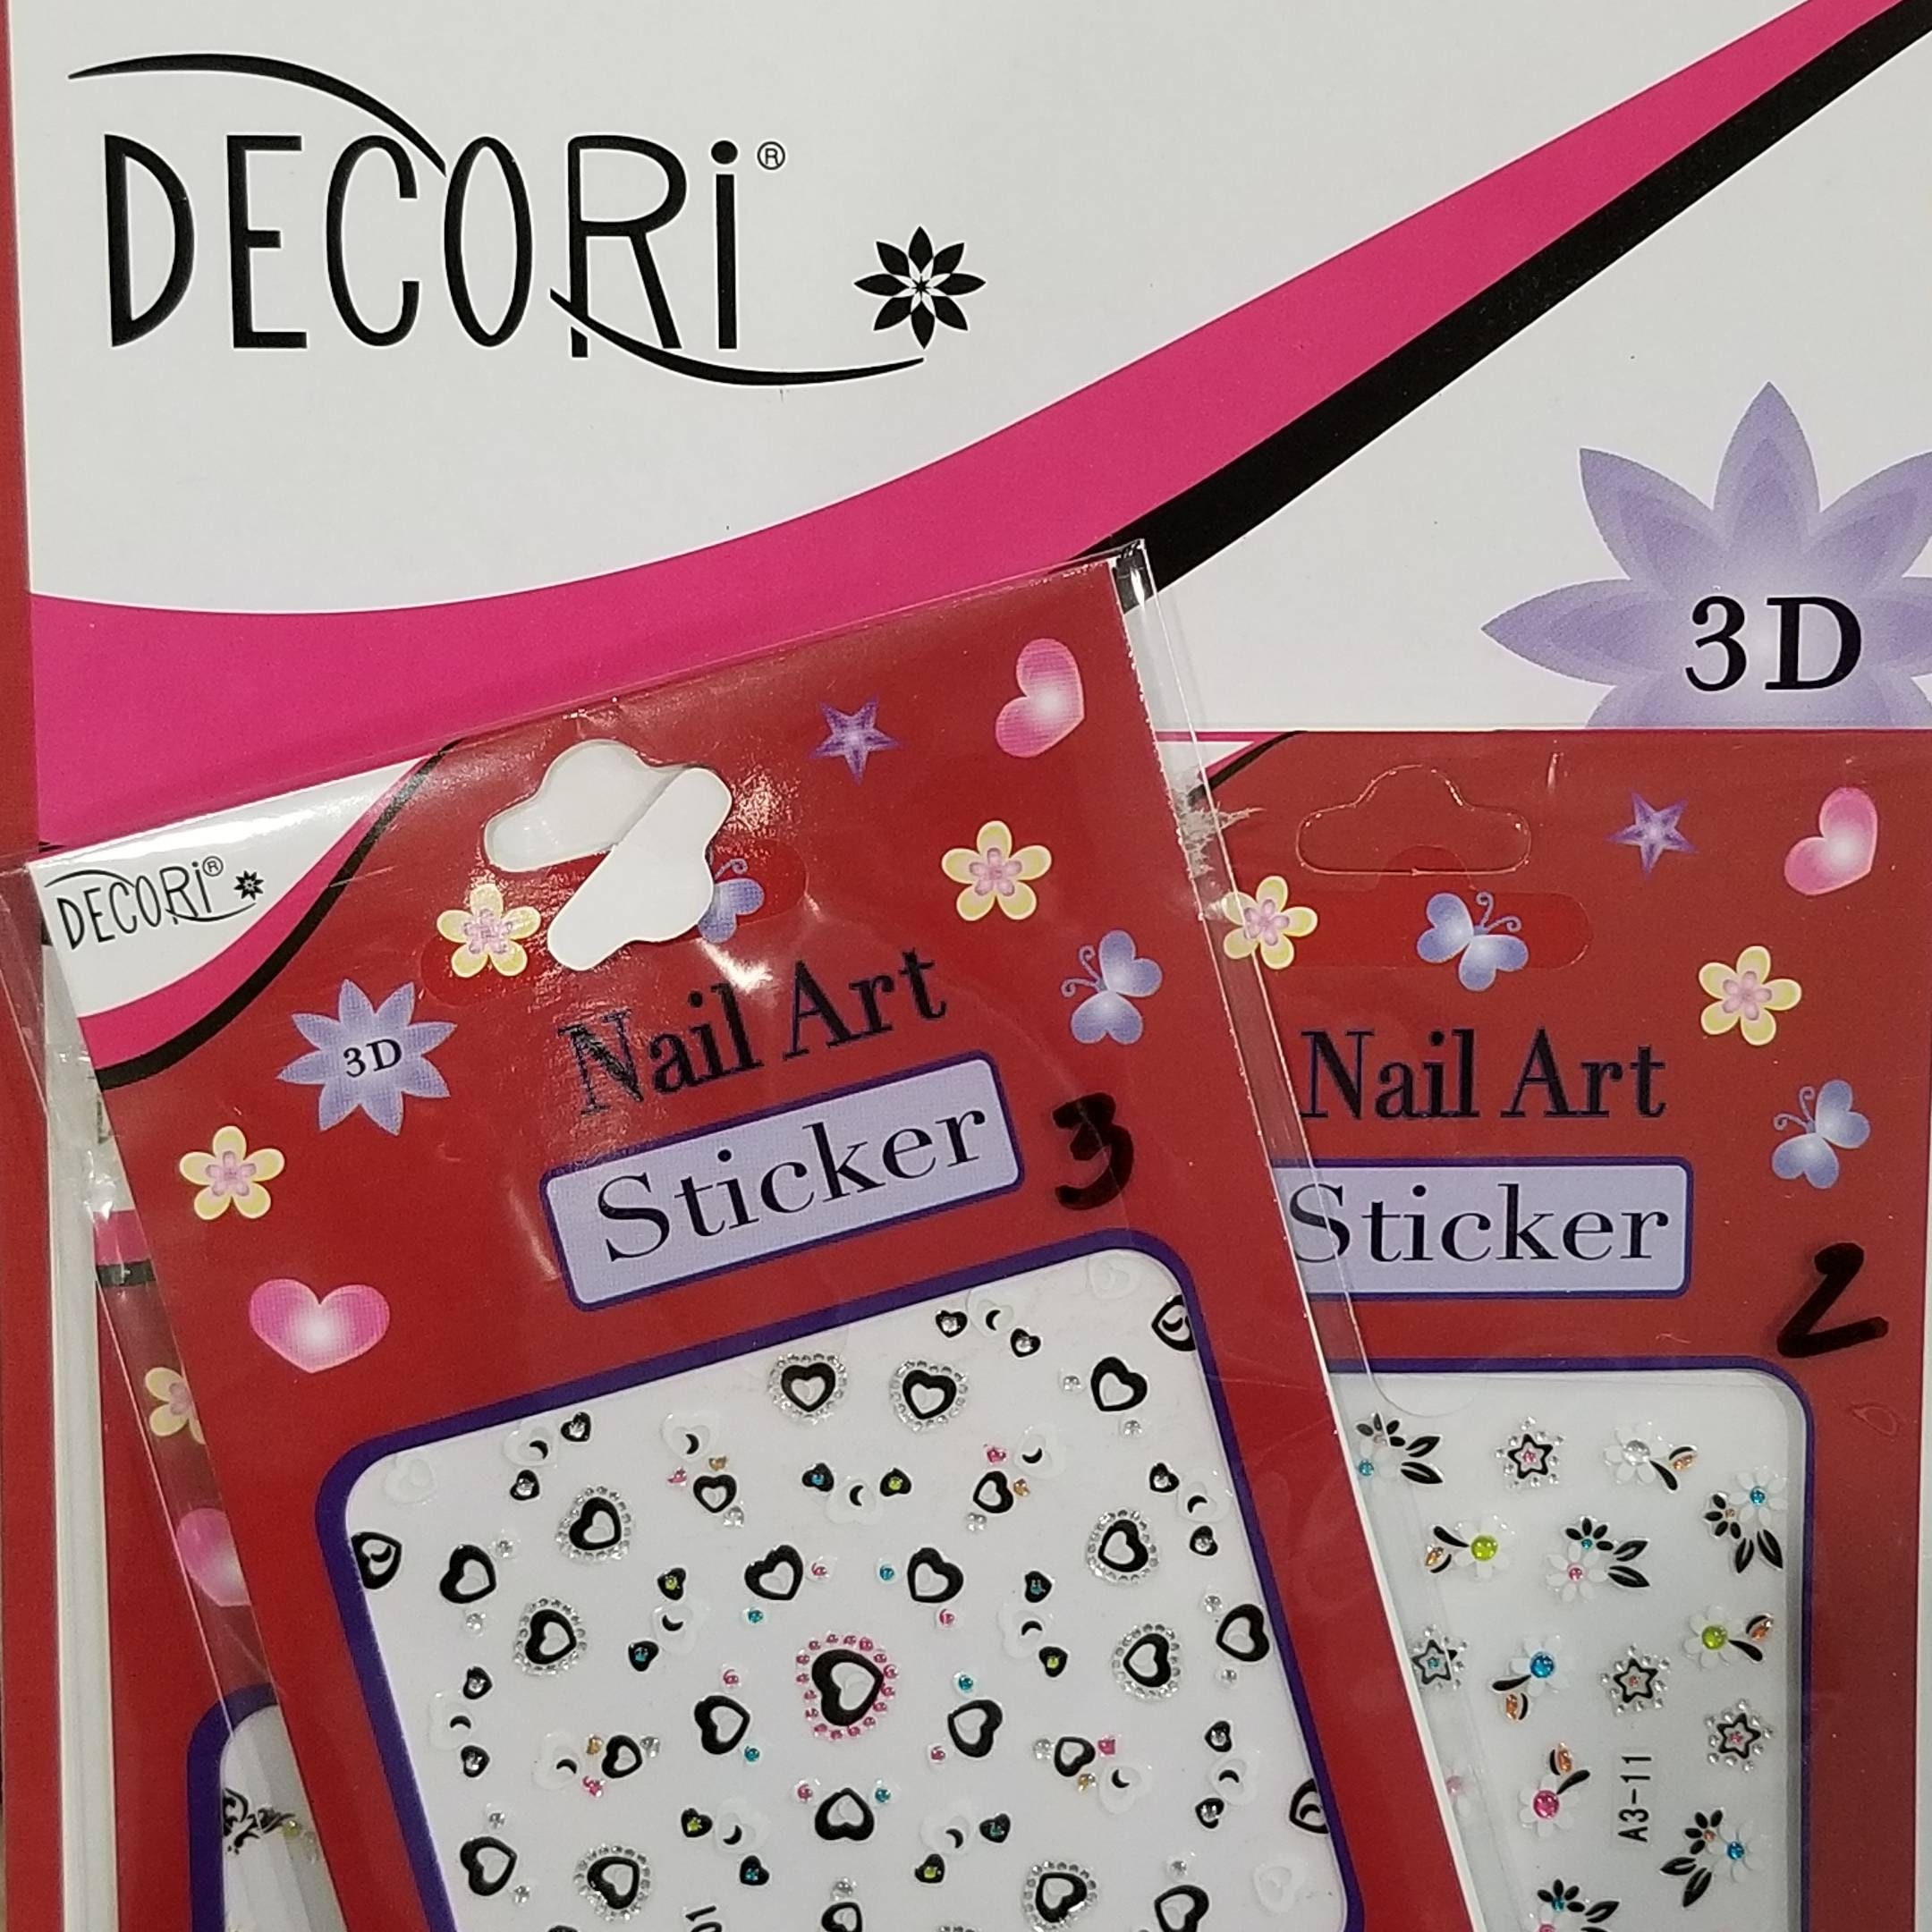 Decori 3D Nail Arts Sticker. Adr3d.free Shipping 